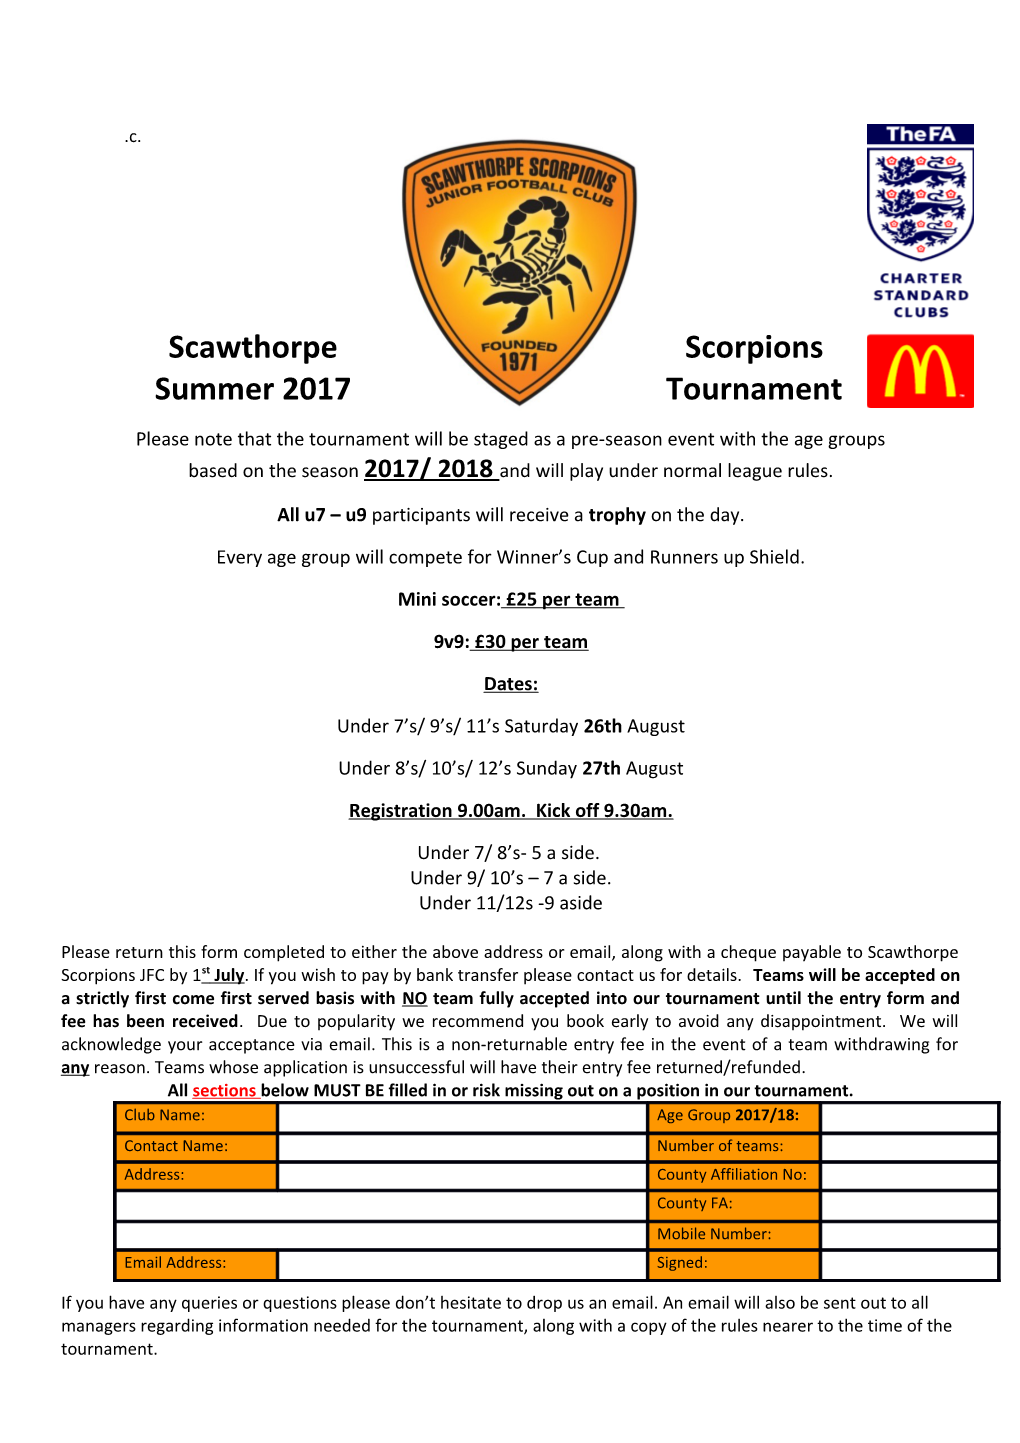 Scawthorpe Scorpions Summer 2017 Tournament